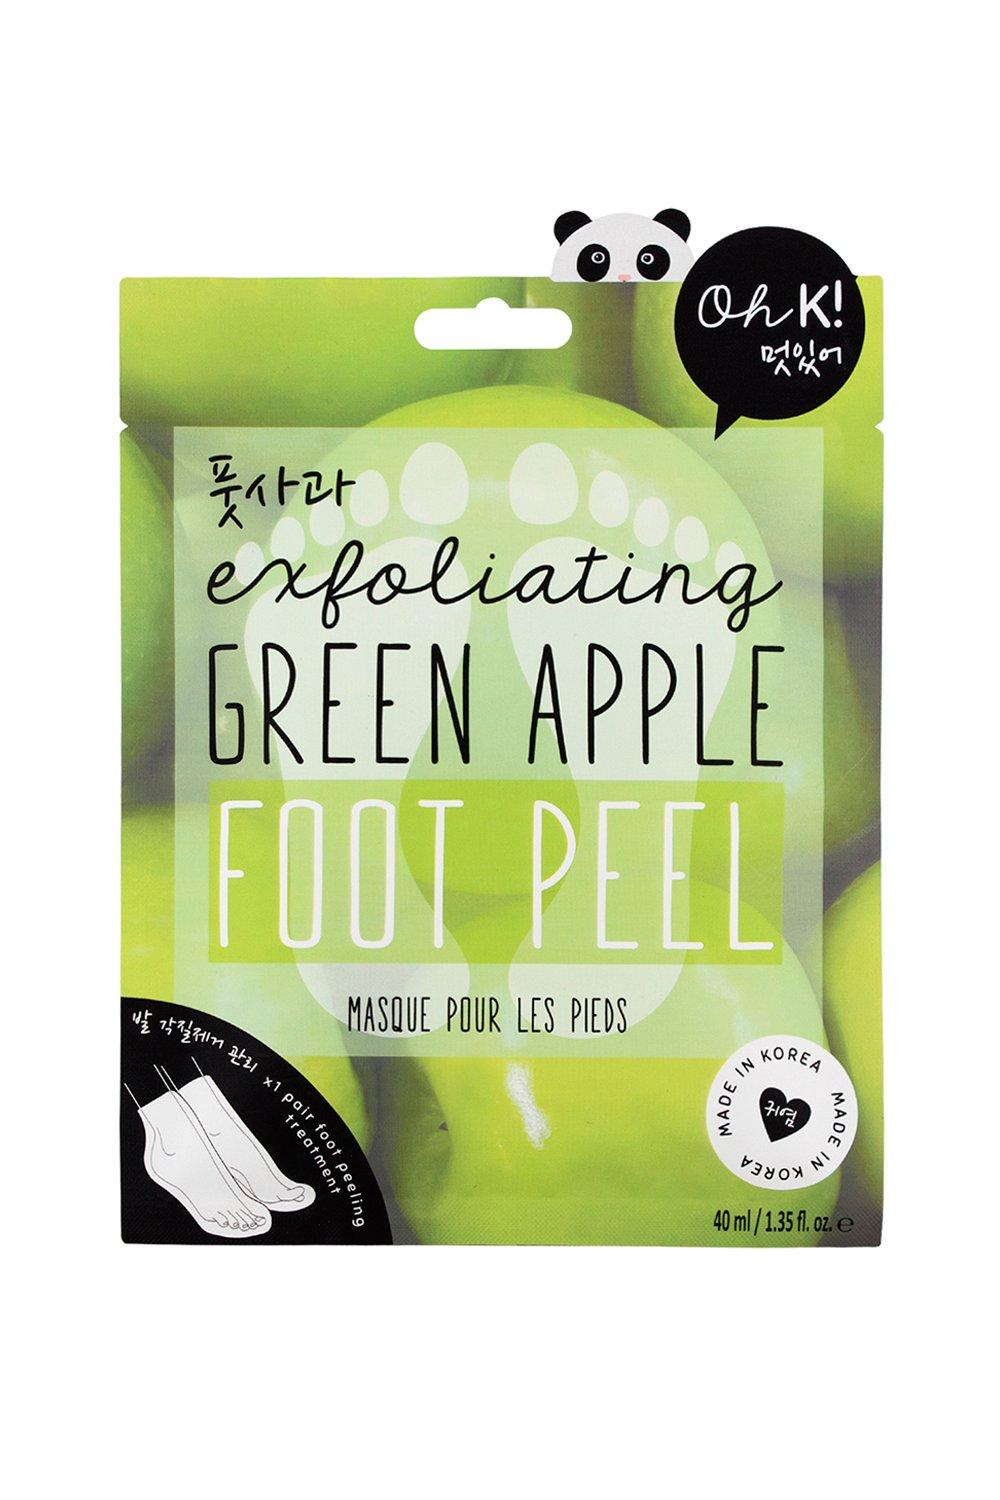 exfoliating green apple foot peel